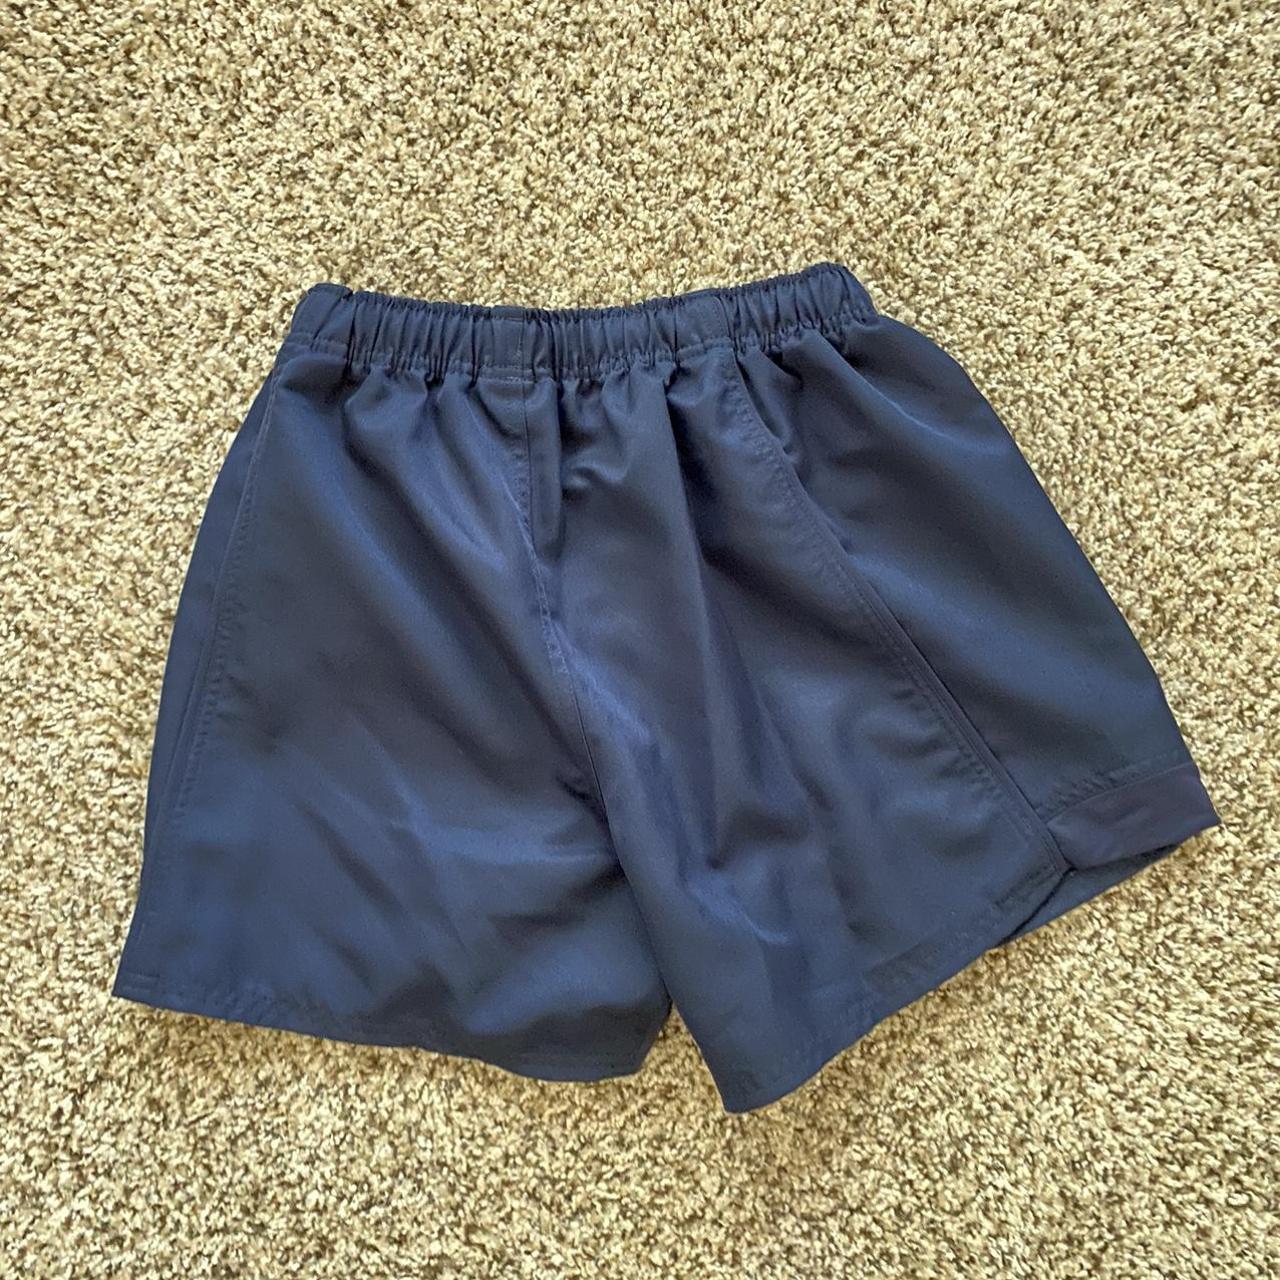 Canterbury Men's Blue and Navy Shorts